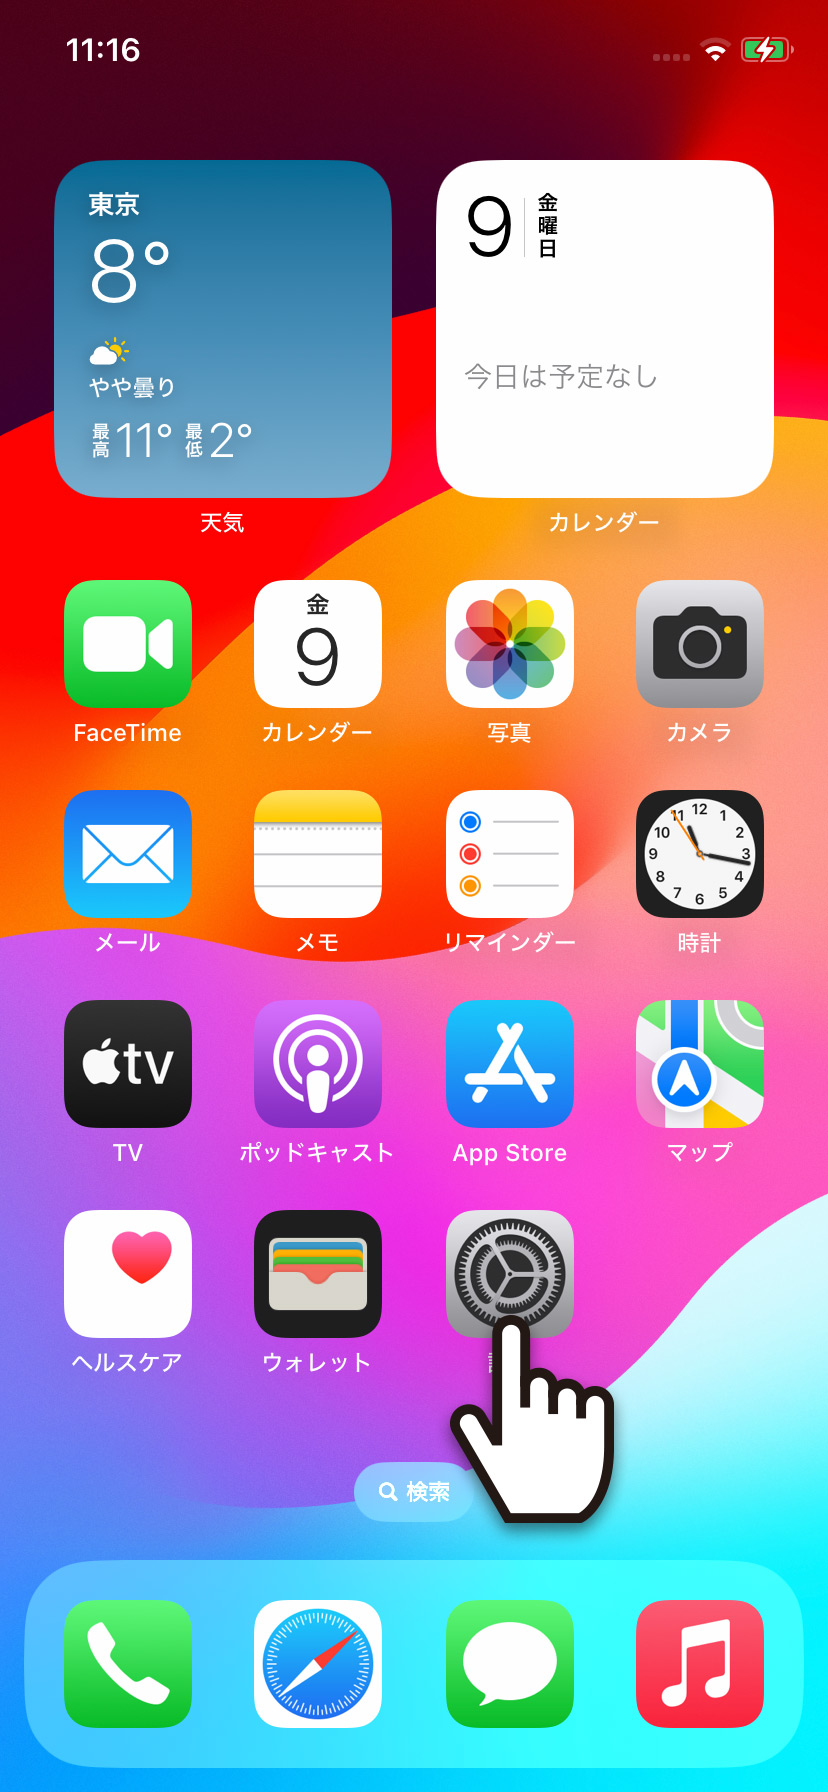 【iPhone】Safariのアドレスバーの位置を変更する